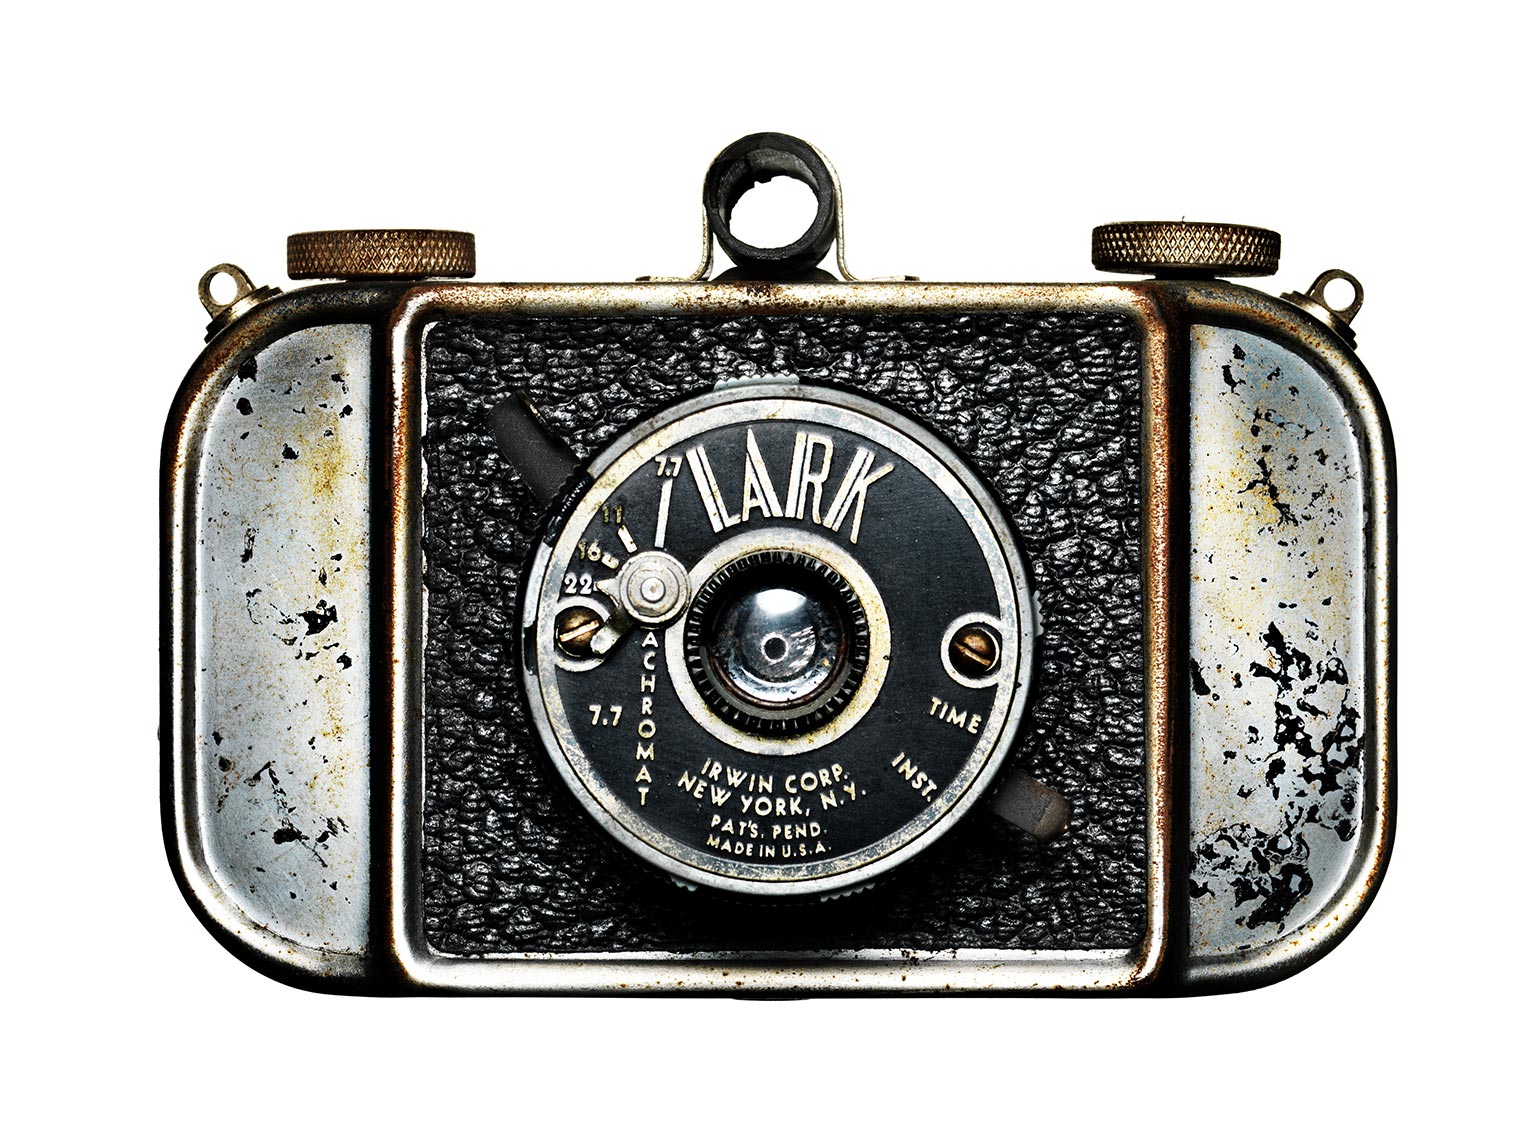 Vintage Lark Camera — Boston Still Life and Product Photography 